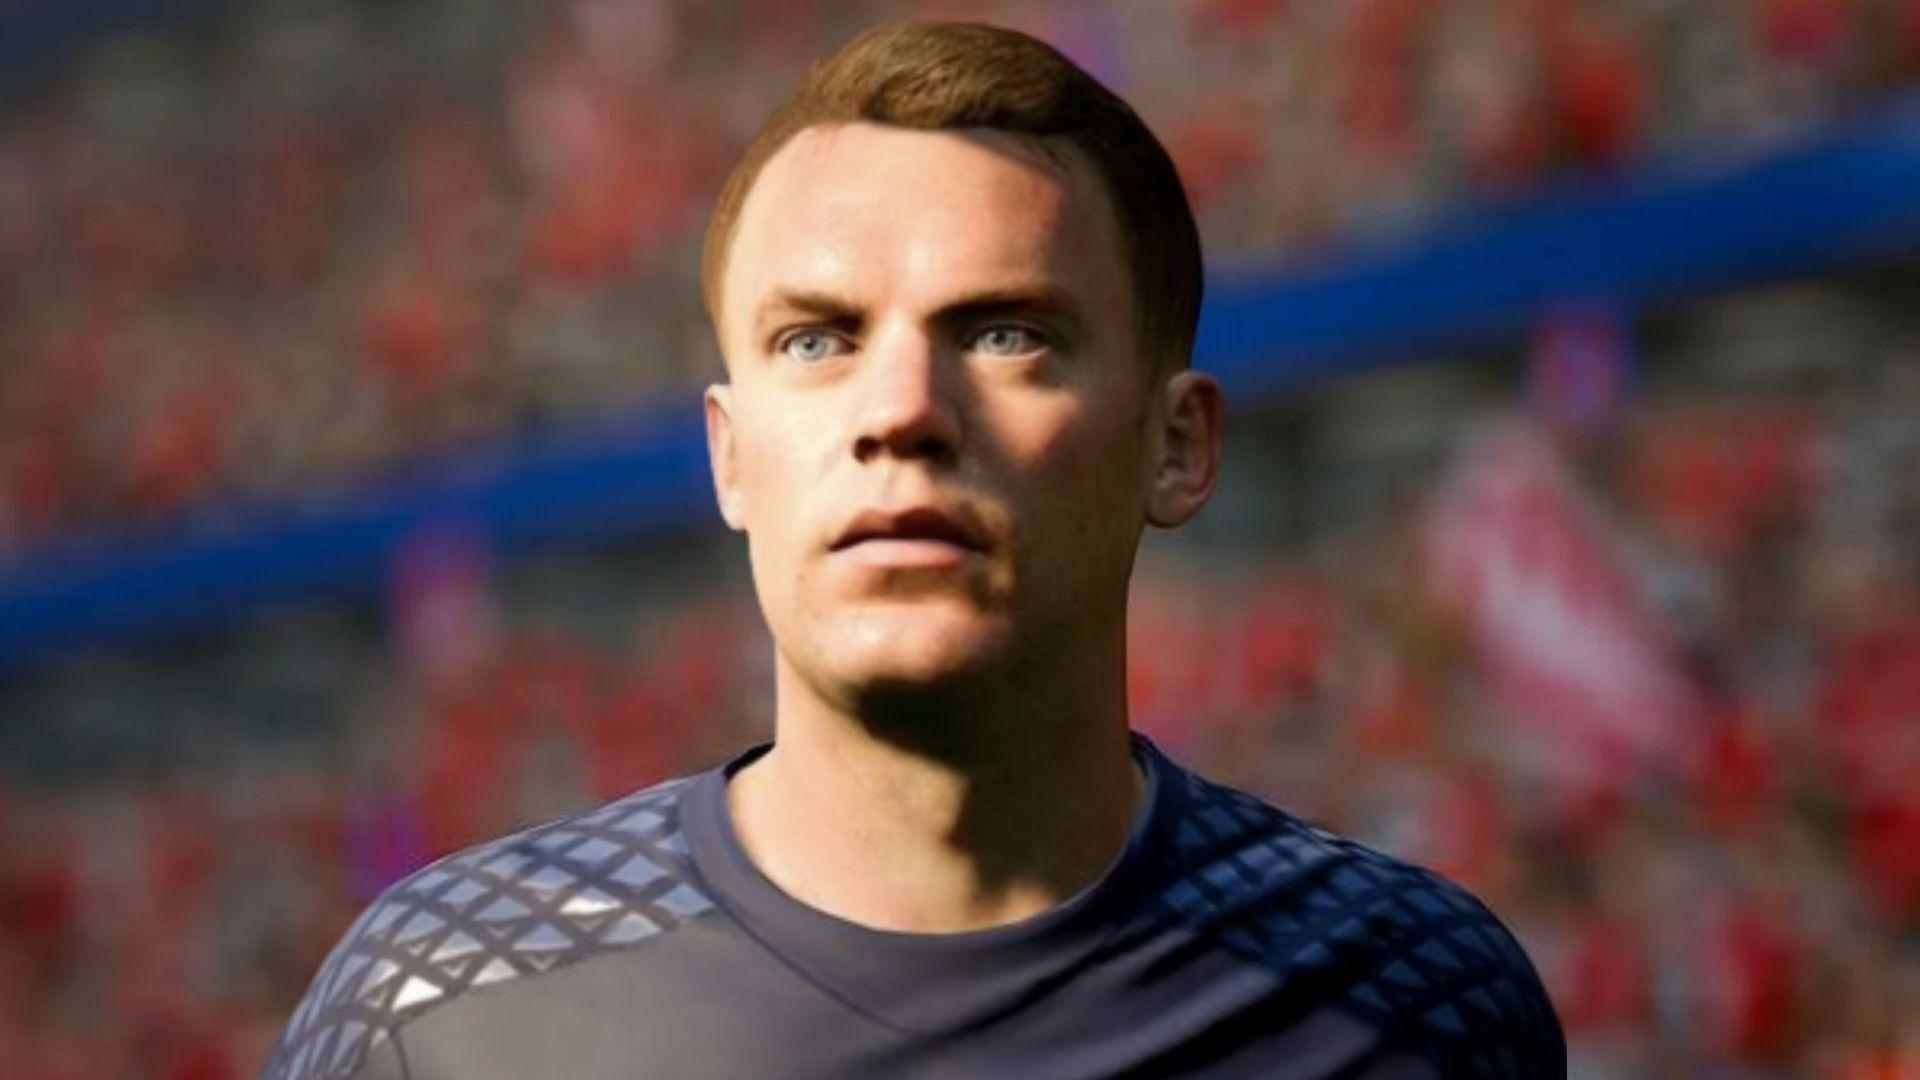 FIFA 20 goalkeeper Neuer